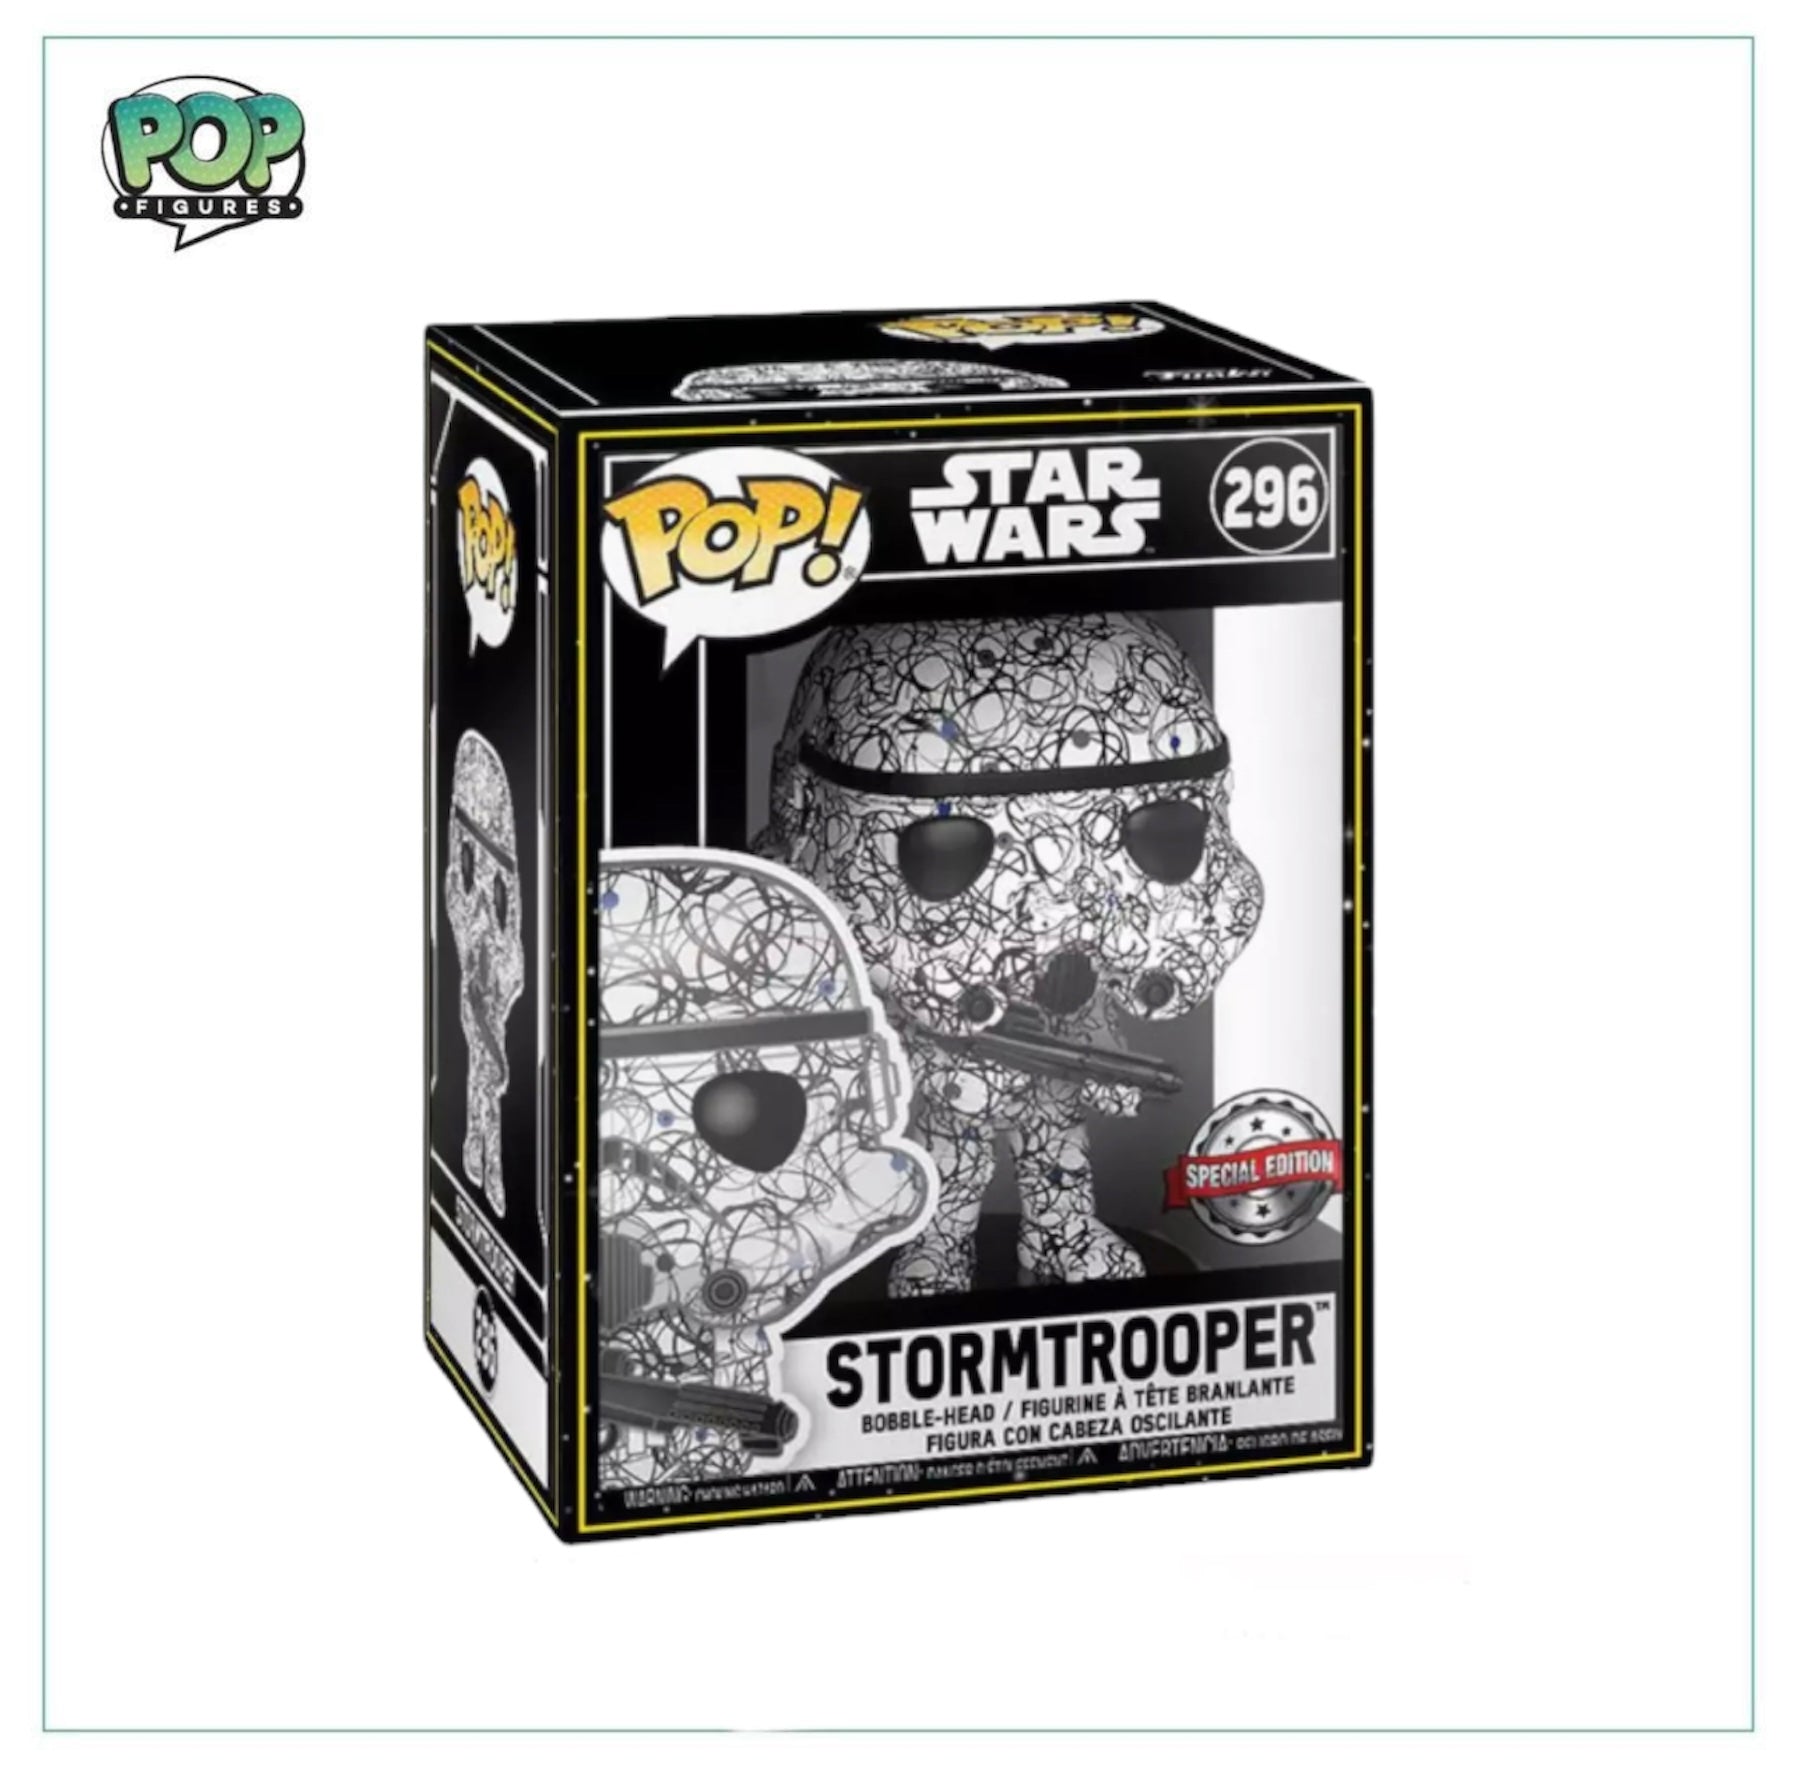 Stormtrooper (Futura) #296 Funko Pop! Star Wars - Special Edition